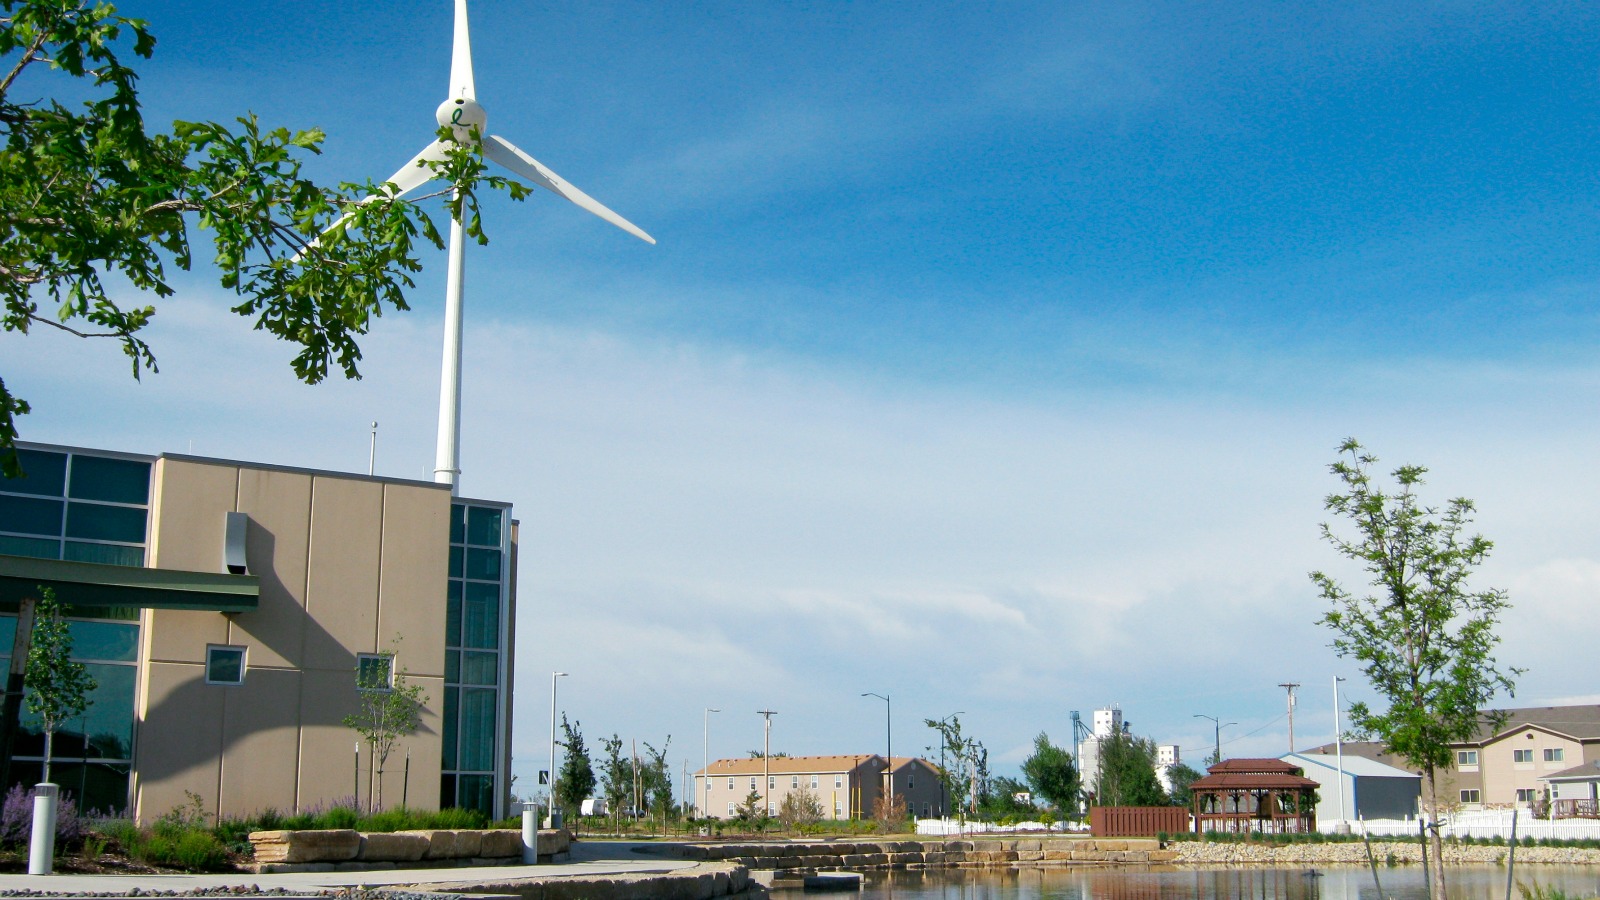 Greensburg's hospital has its own wind turbine.